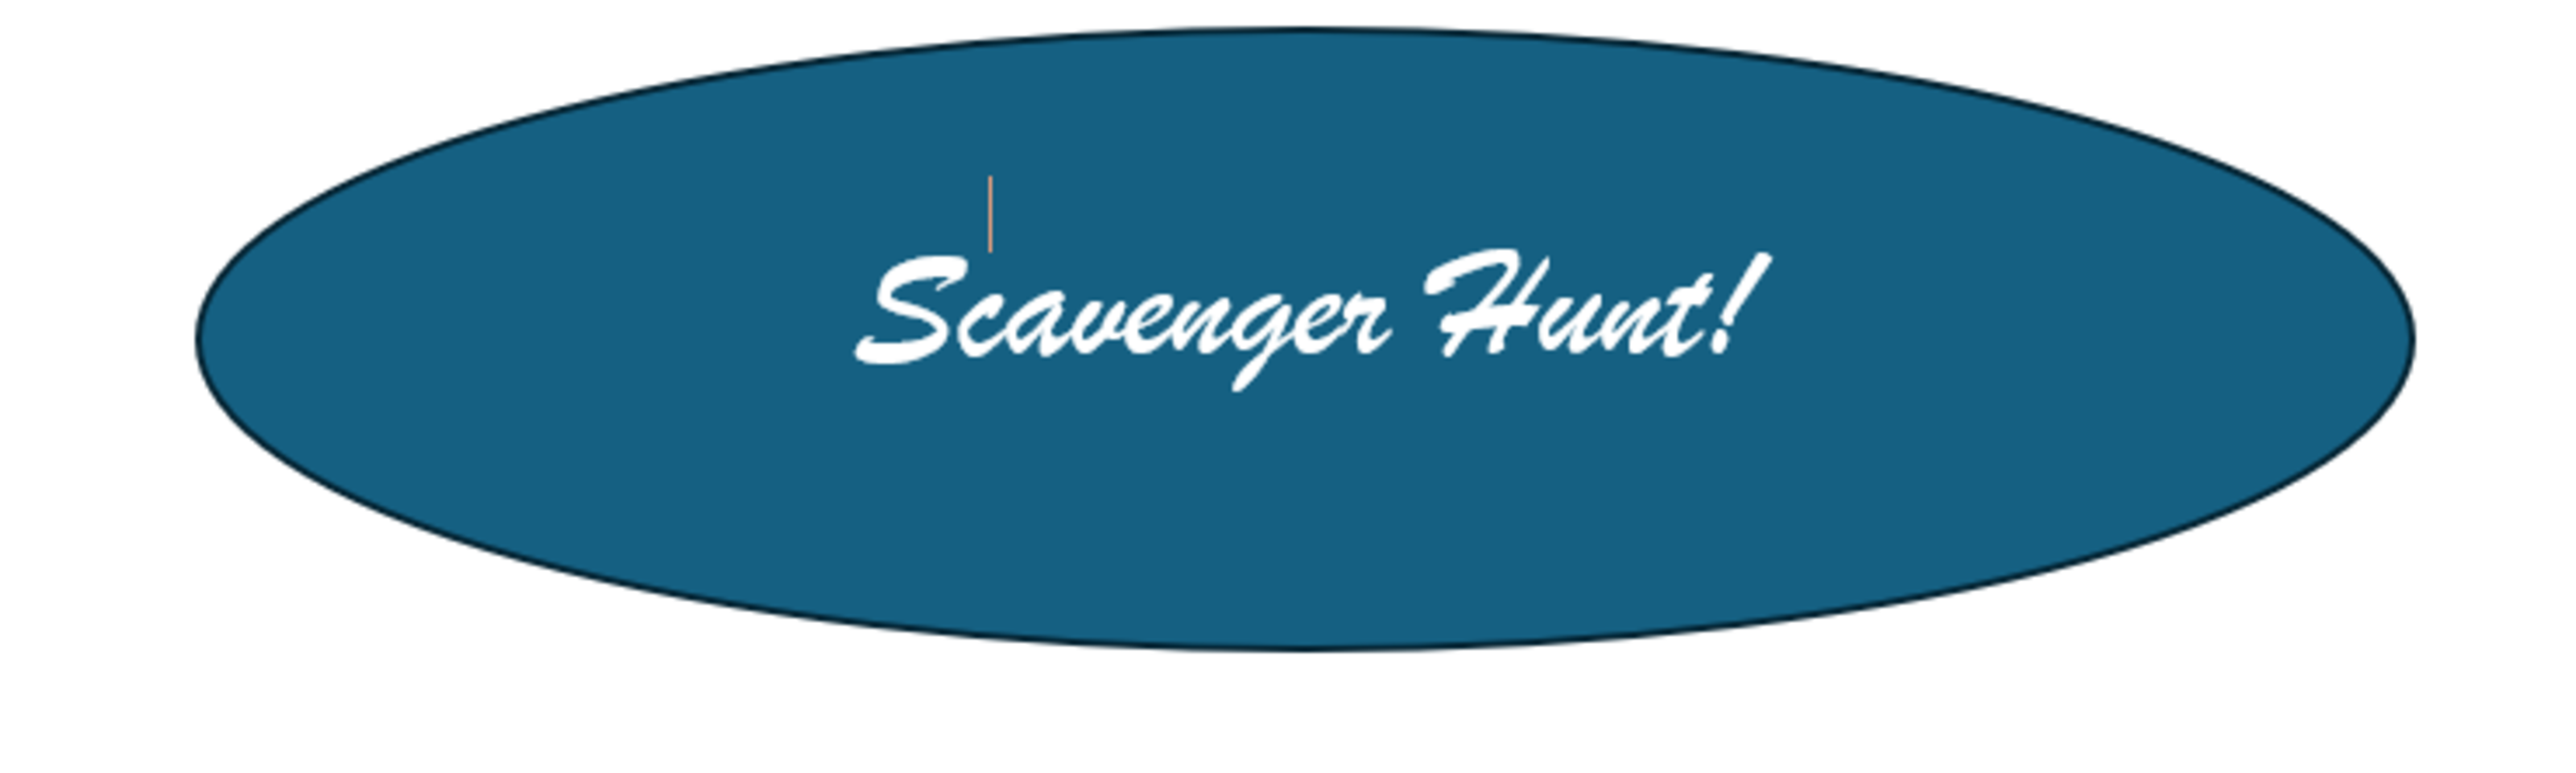 Summer Scavenger Hunt!